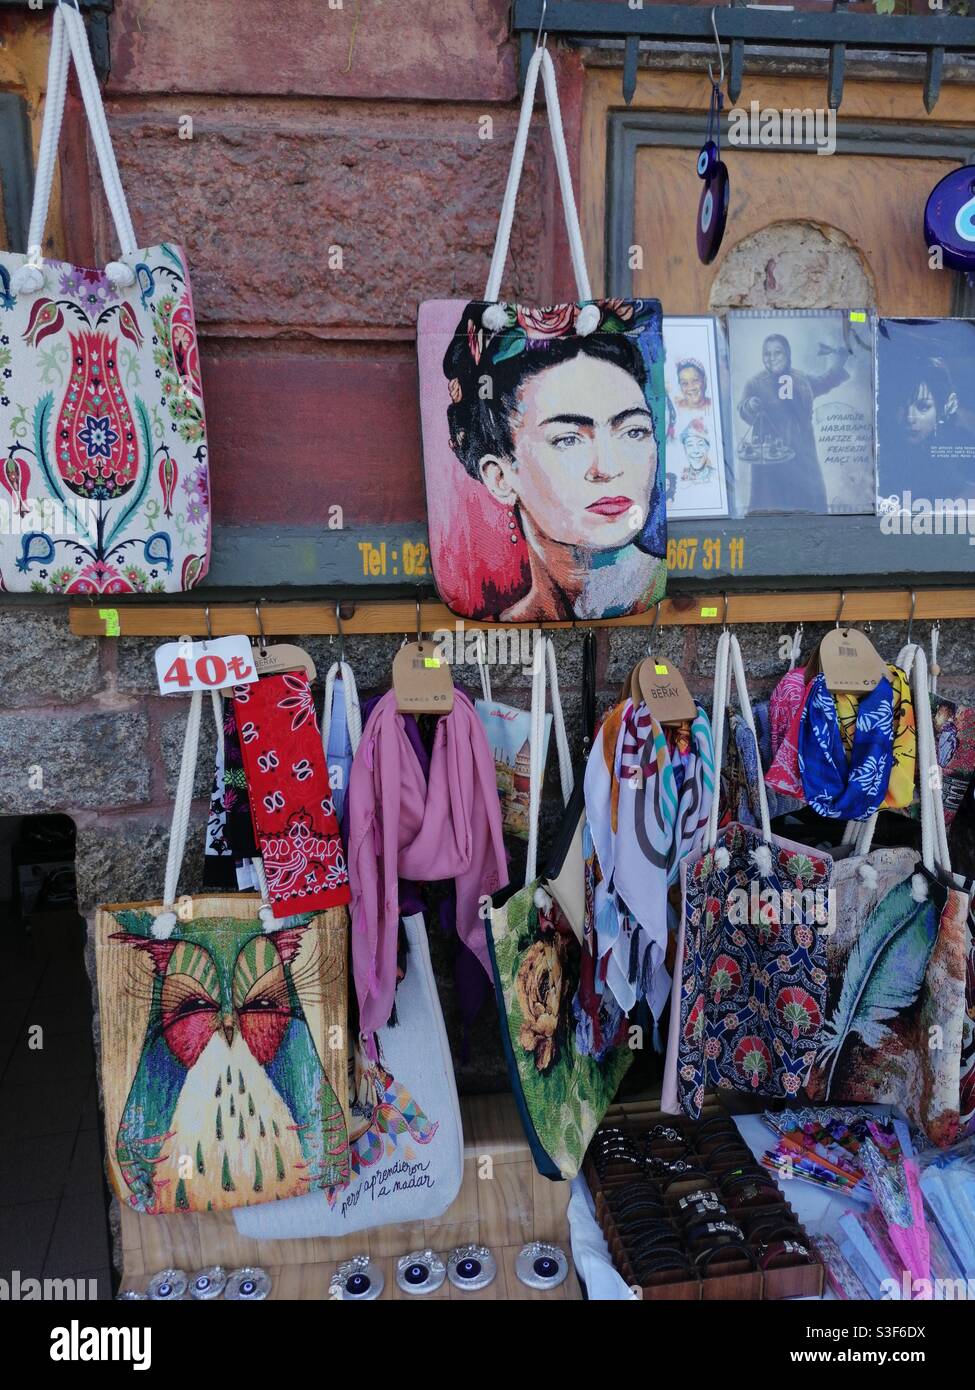 Frida Kahlo at the street market in Istanbul, Turkey Stock Photo